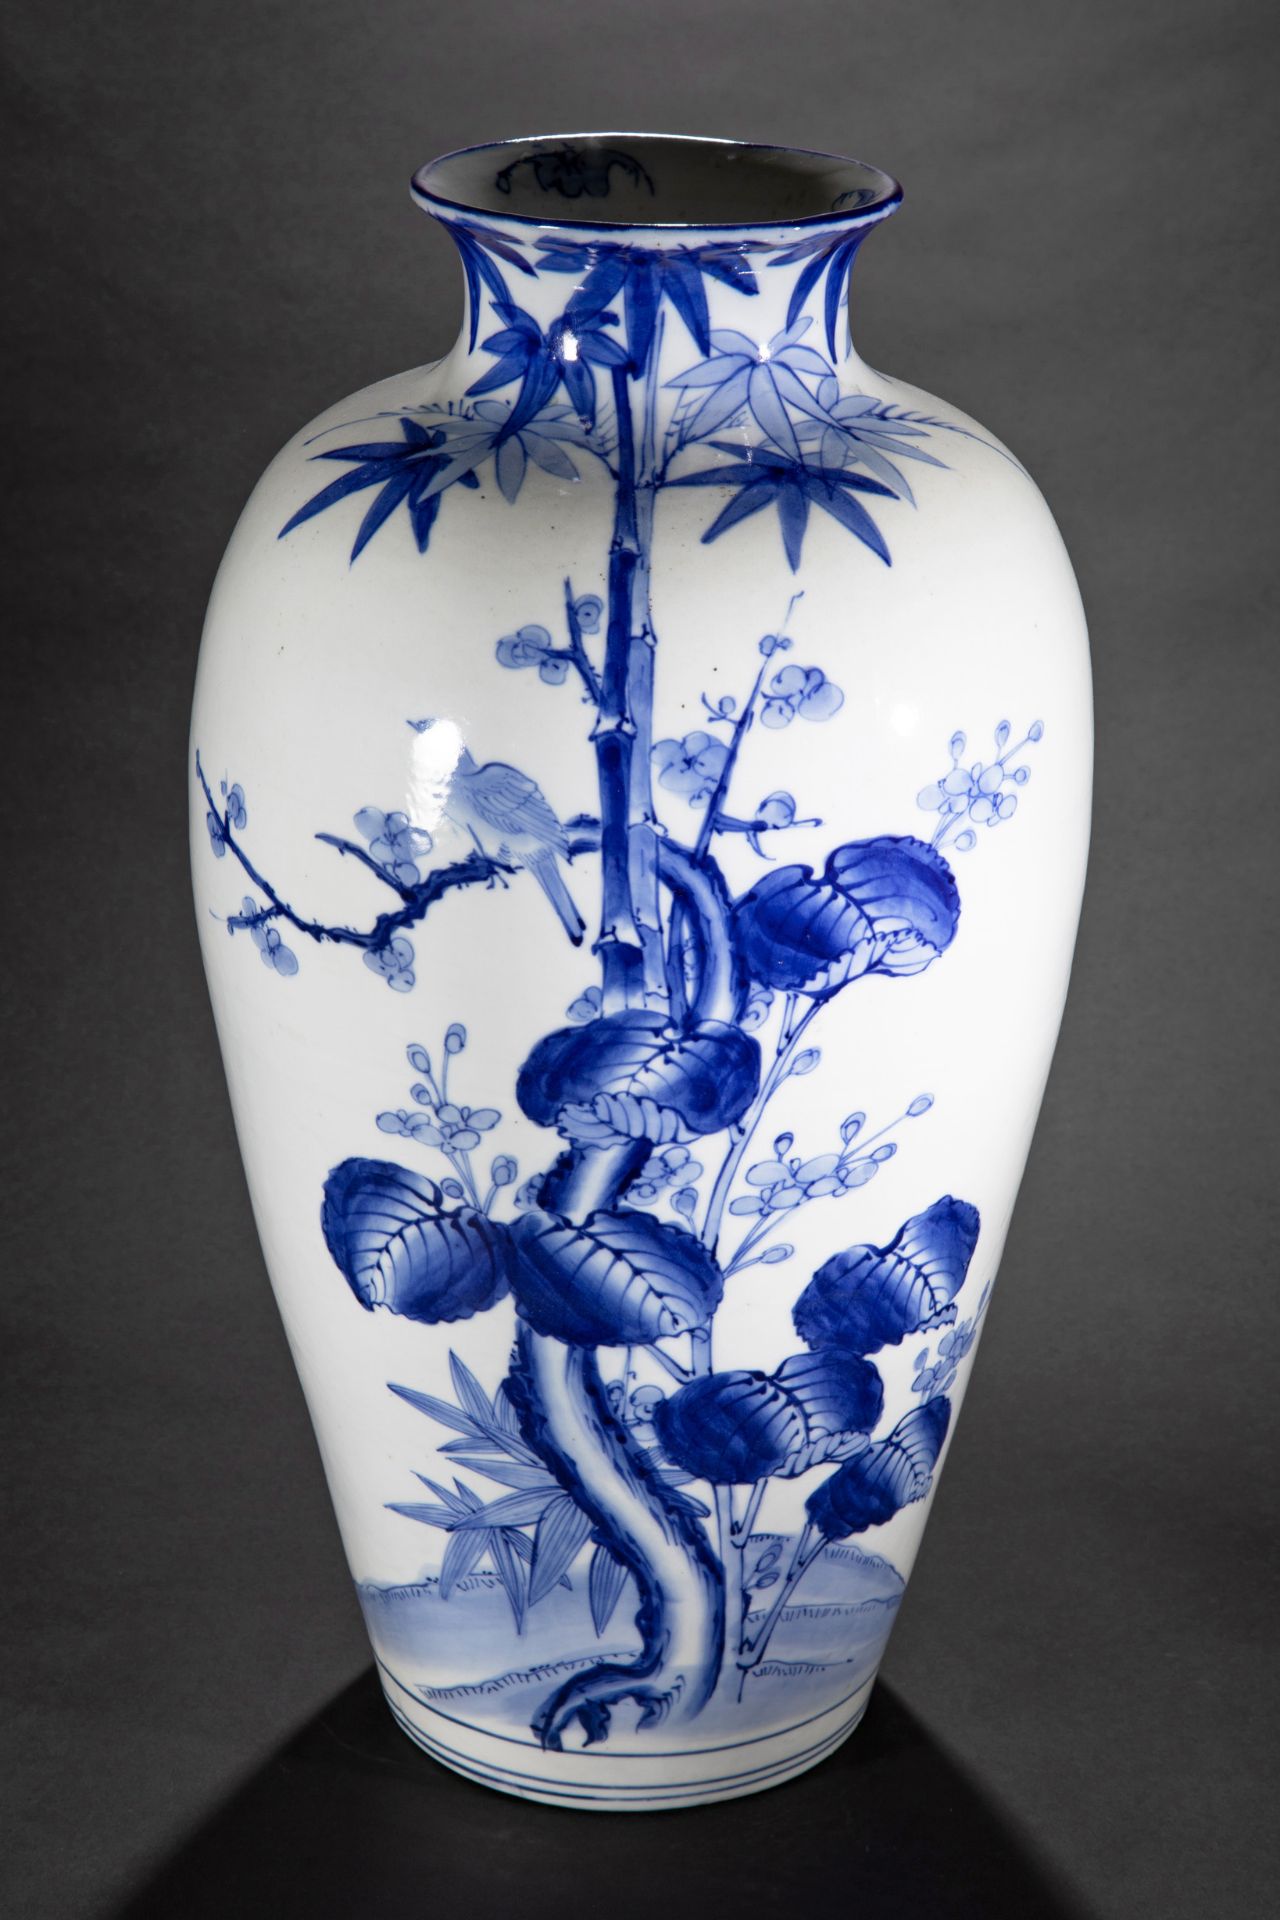 China, Large baluster vase with bamboo, birds and bats, China - Image 2 of 5